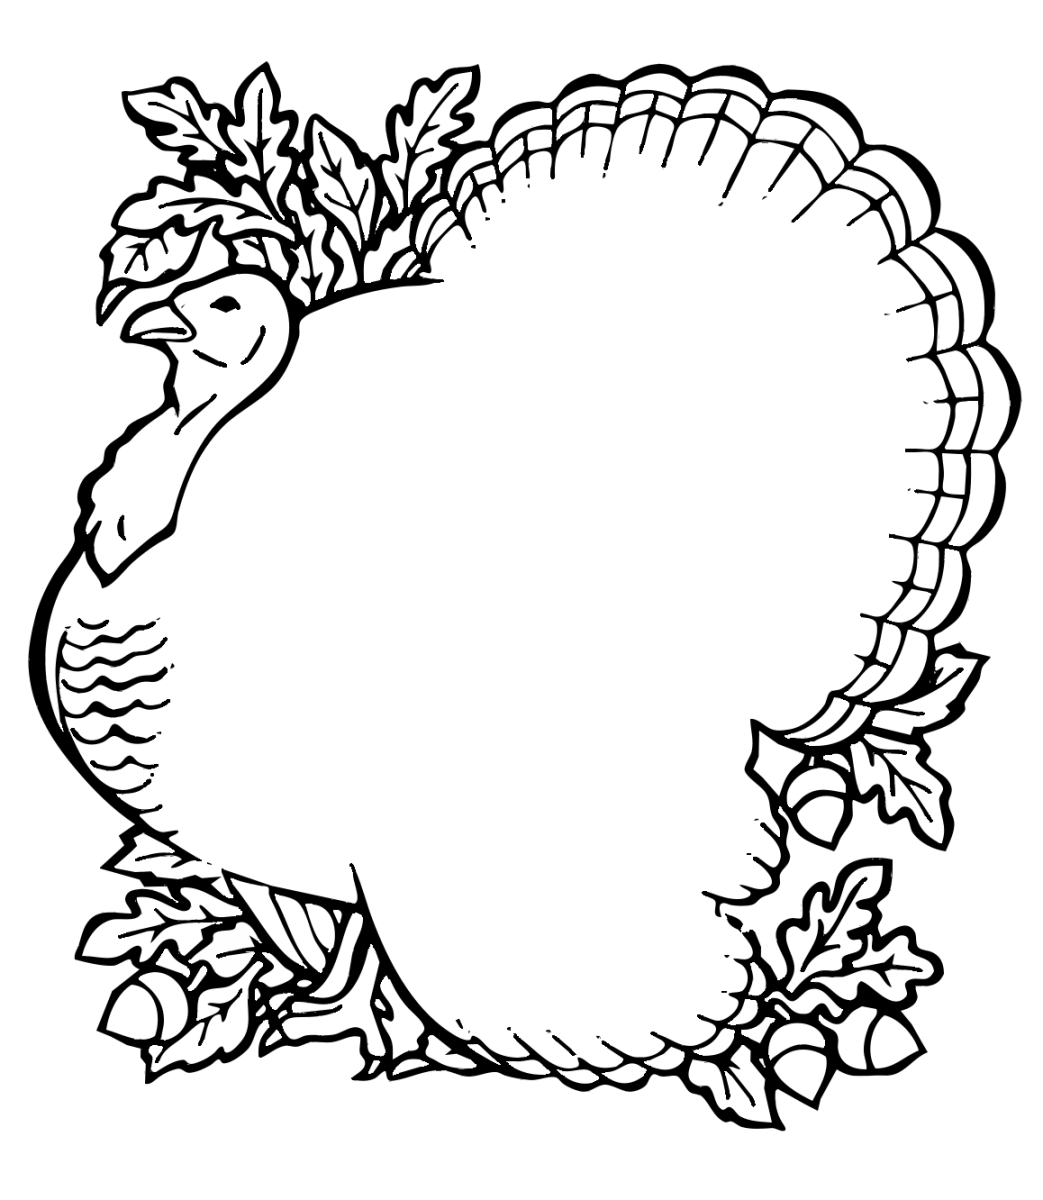 public domain clipart thanksgiving